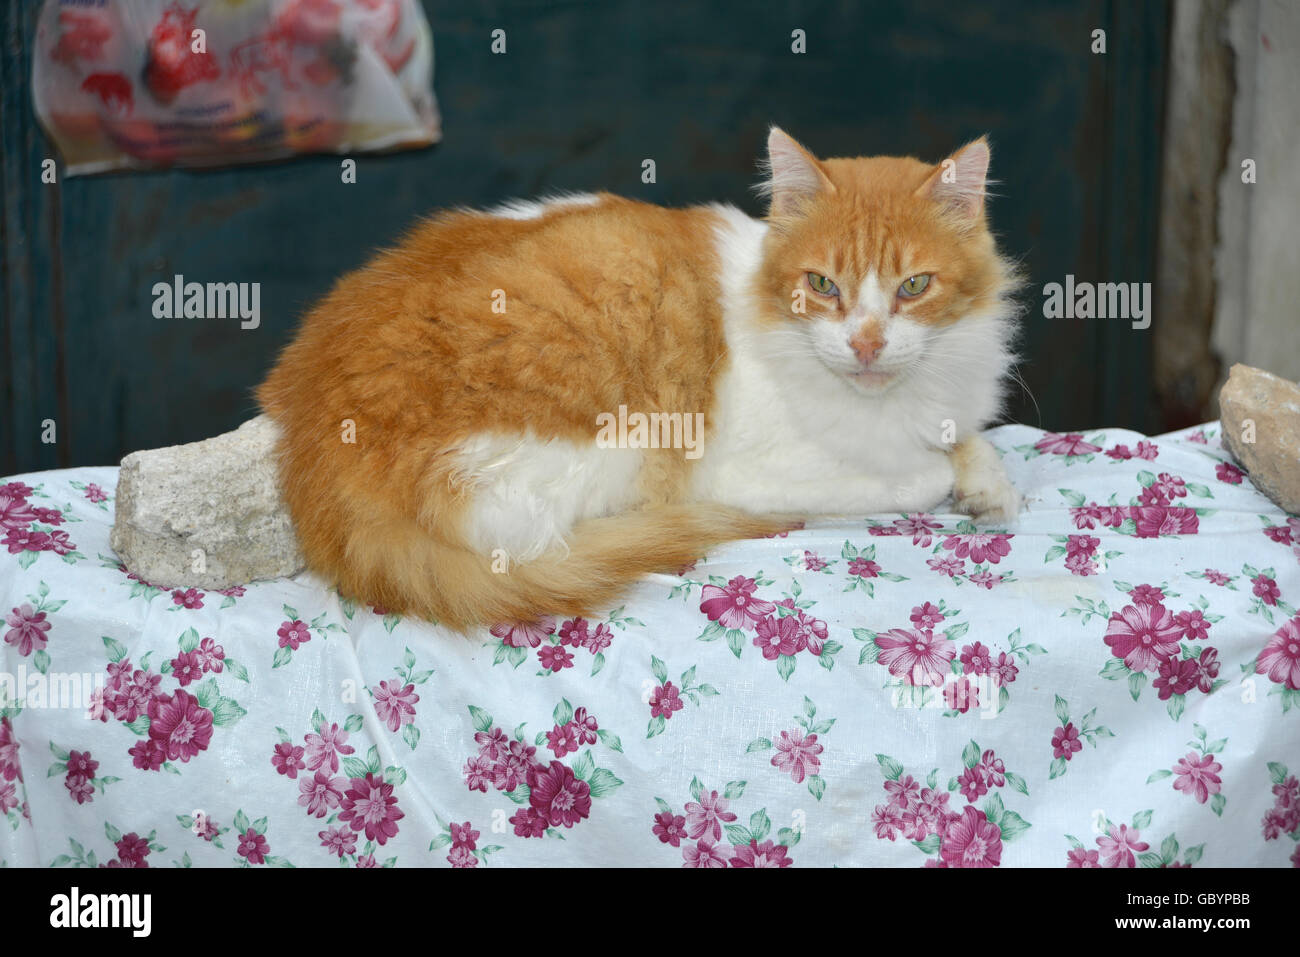 Village typiquement grec grec avec cat on a bed Banque D'Images